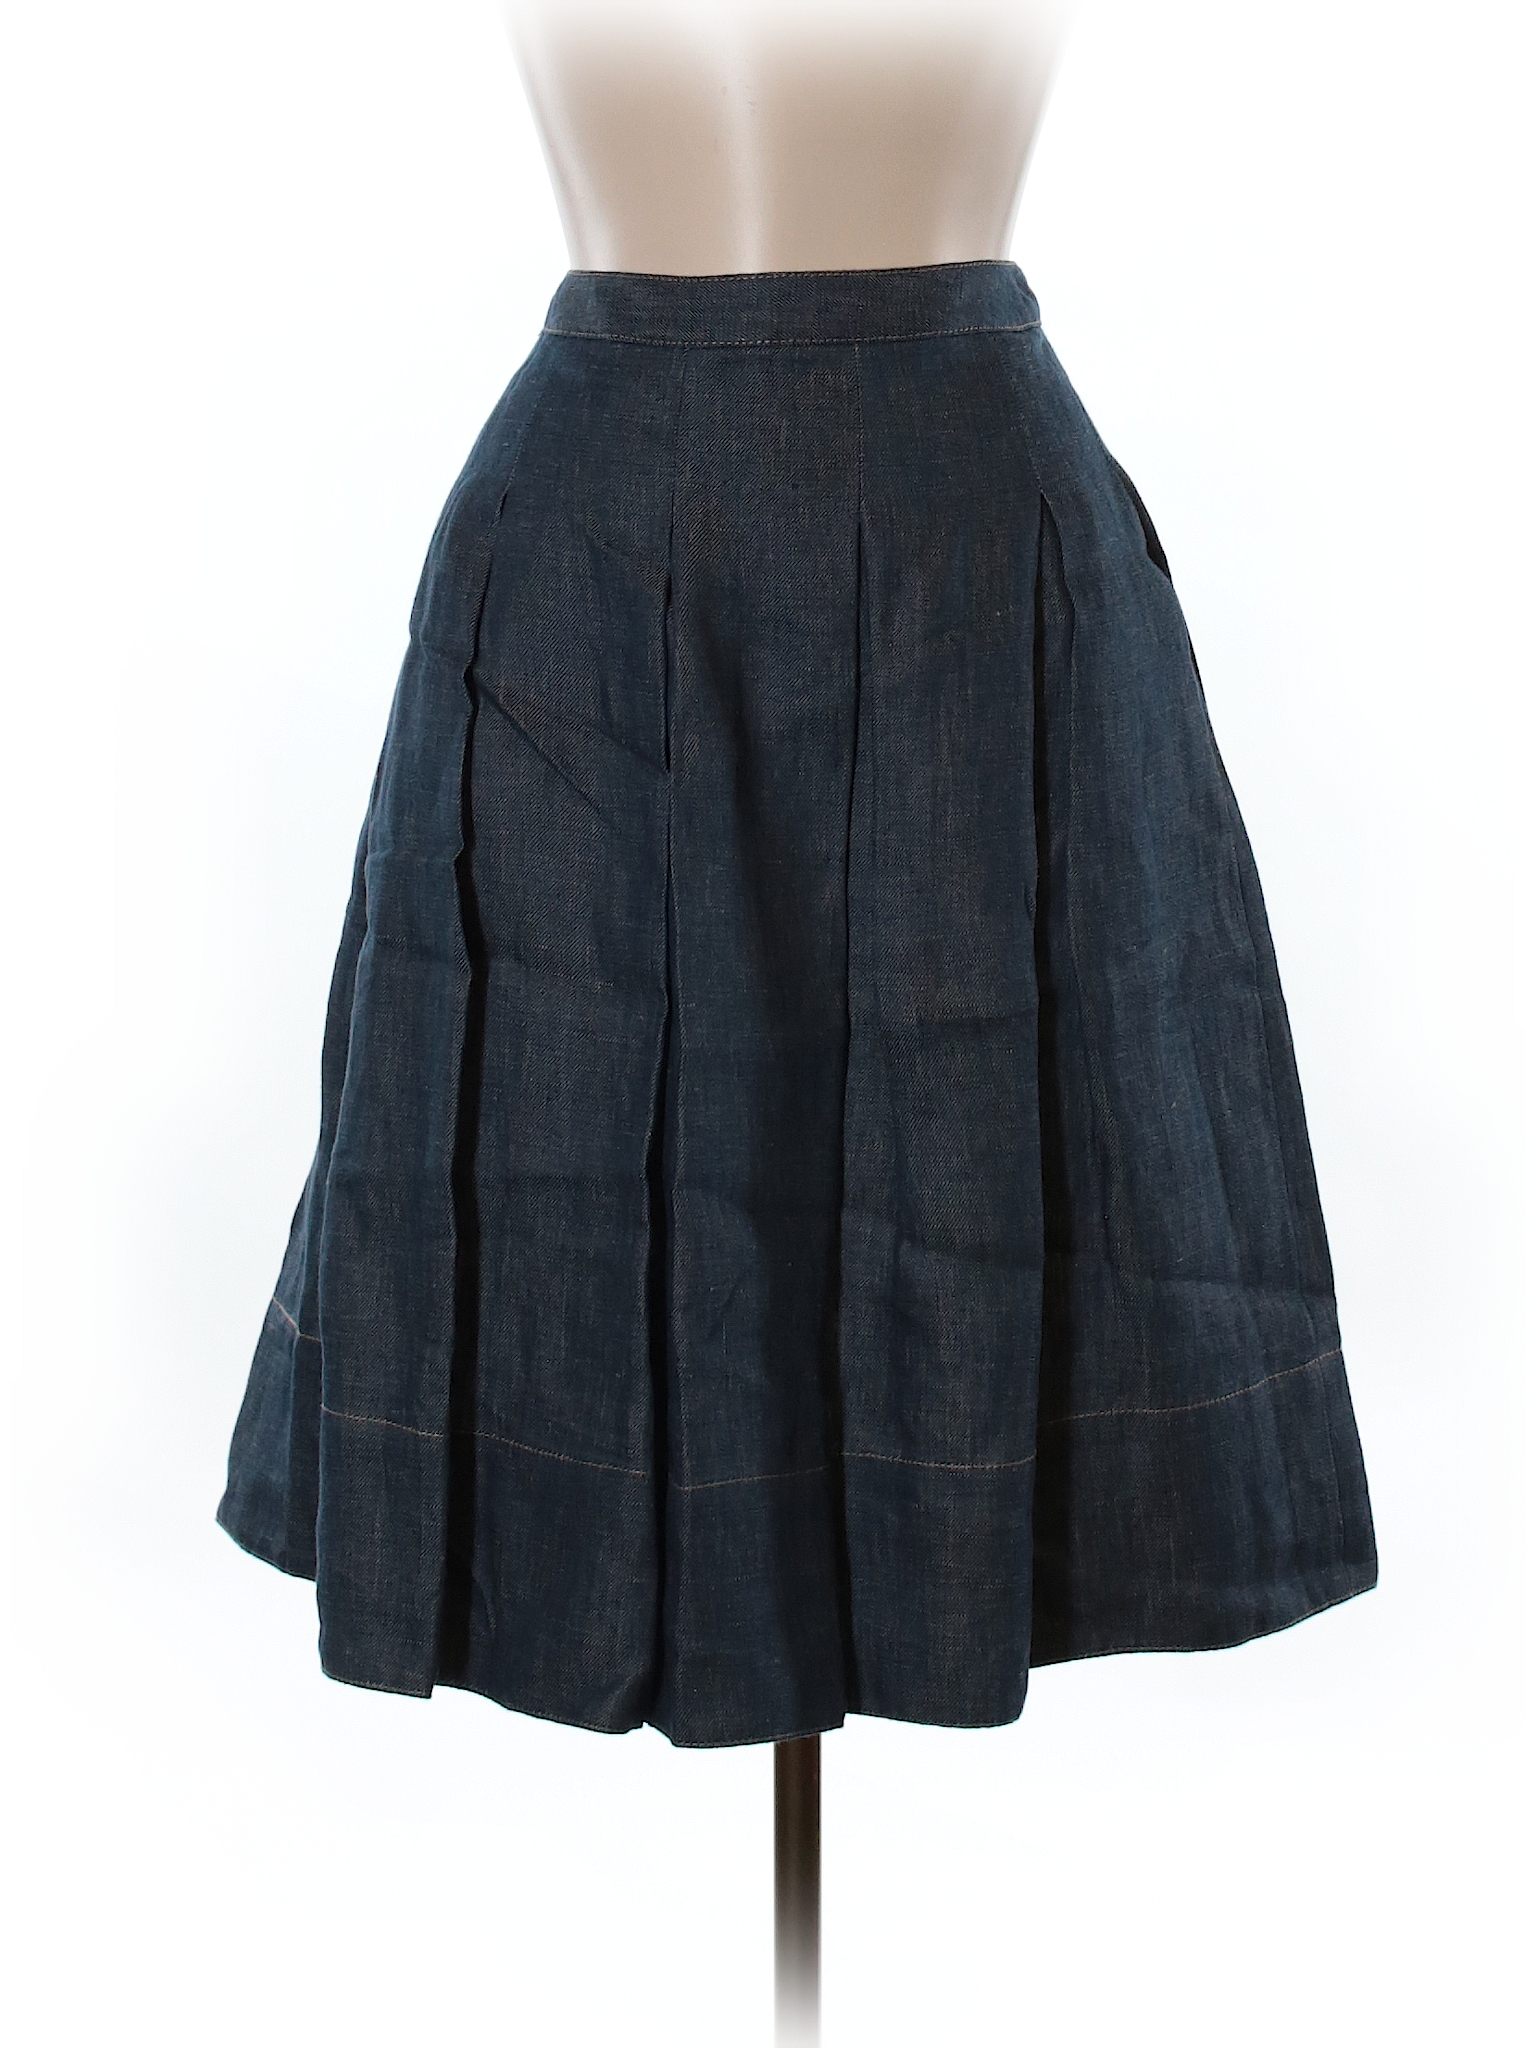 Talbots 100% Linen Solid Dark Blue Casual Skirt Size 6 (Petite) - 82% ...